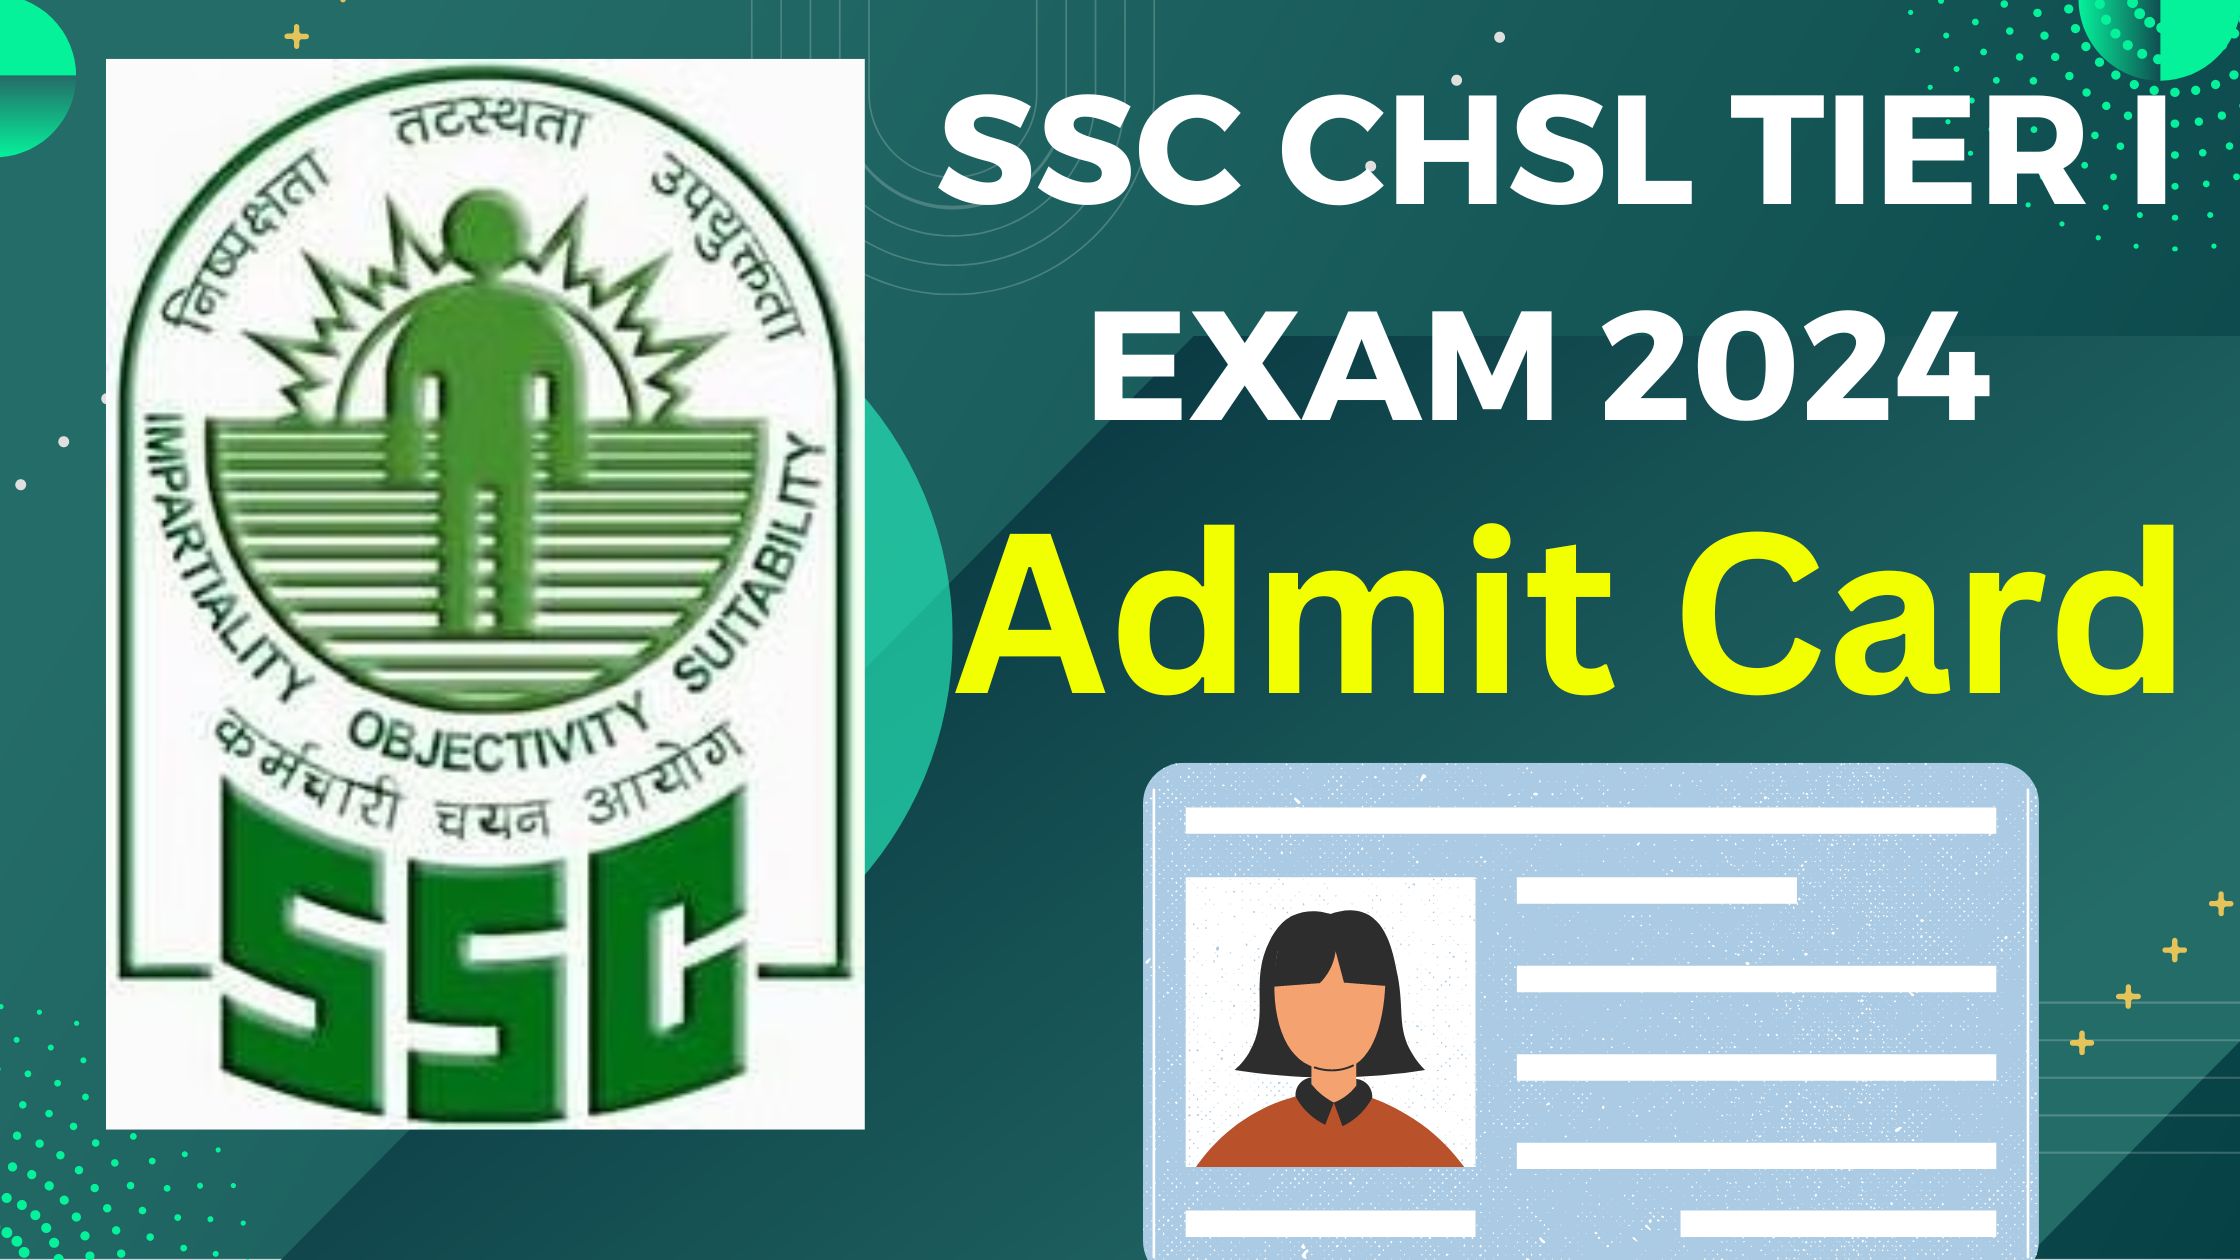 SSC CHSL Tier I Exam 2024 Admit Card